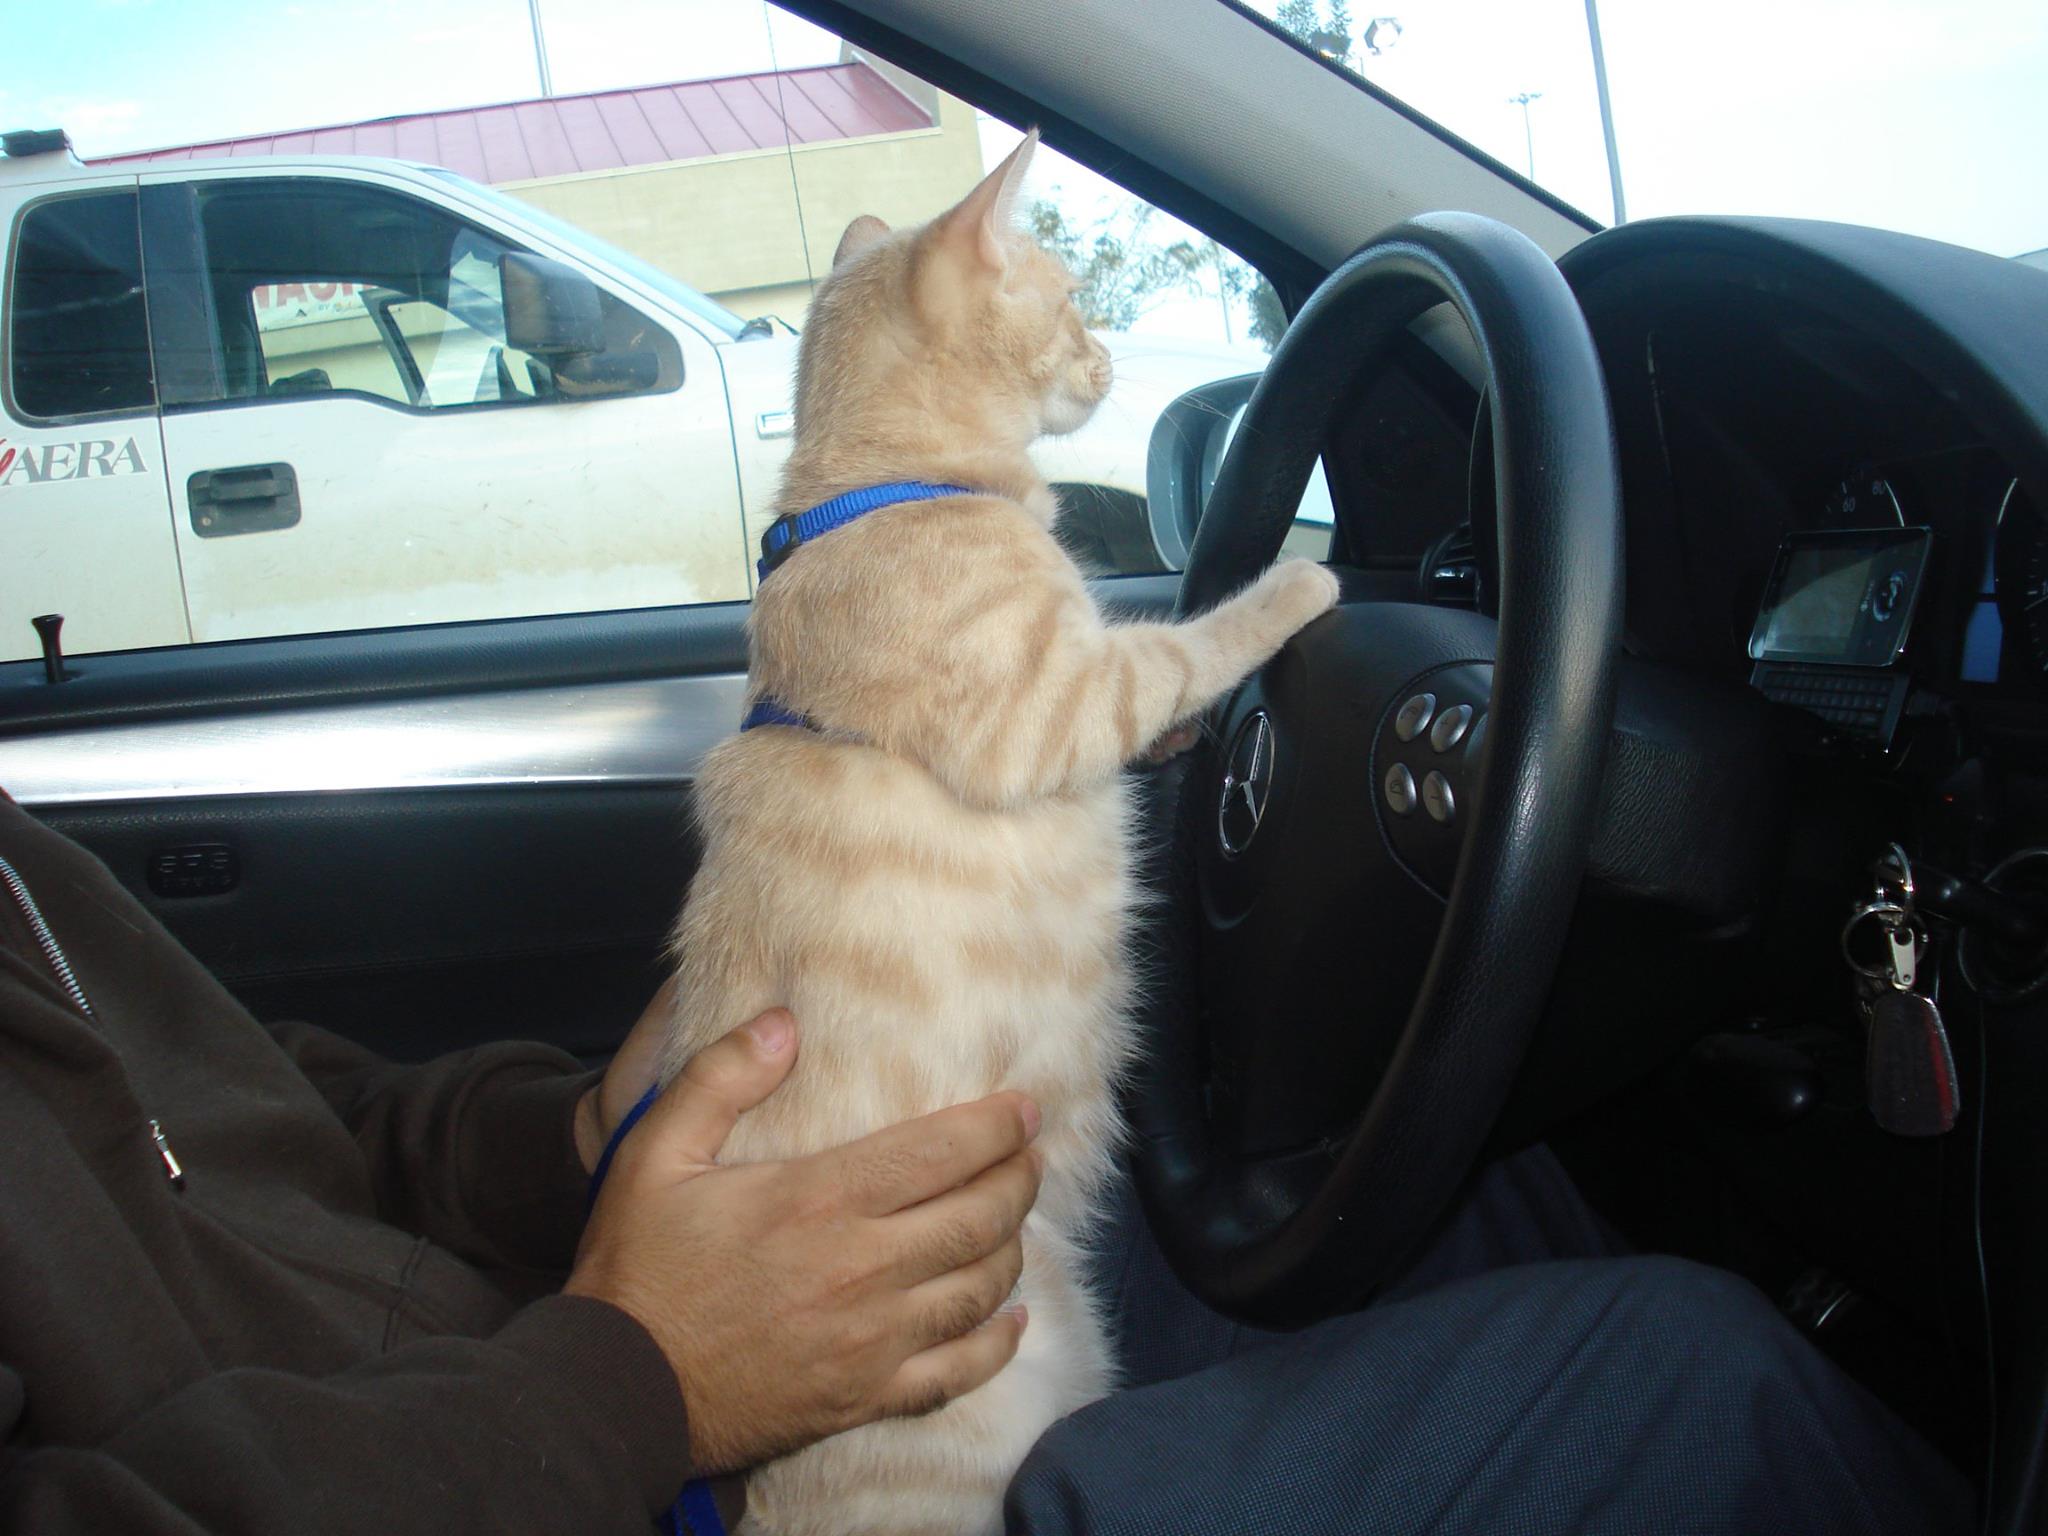 Ocelot finally got his drivers license 